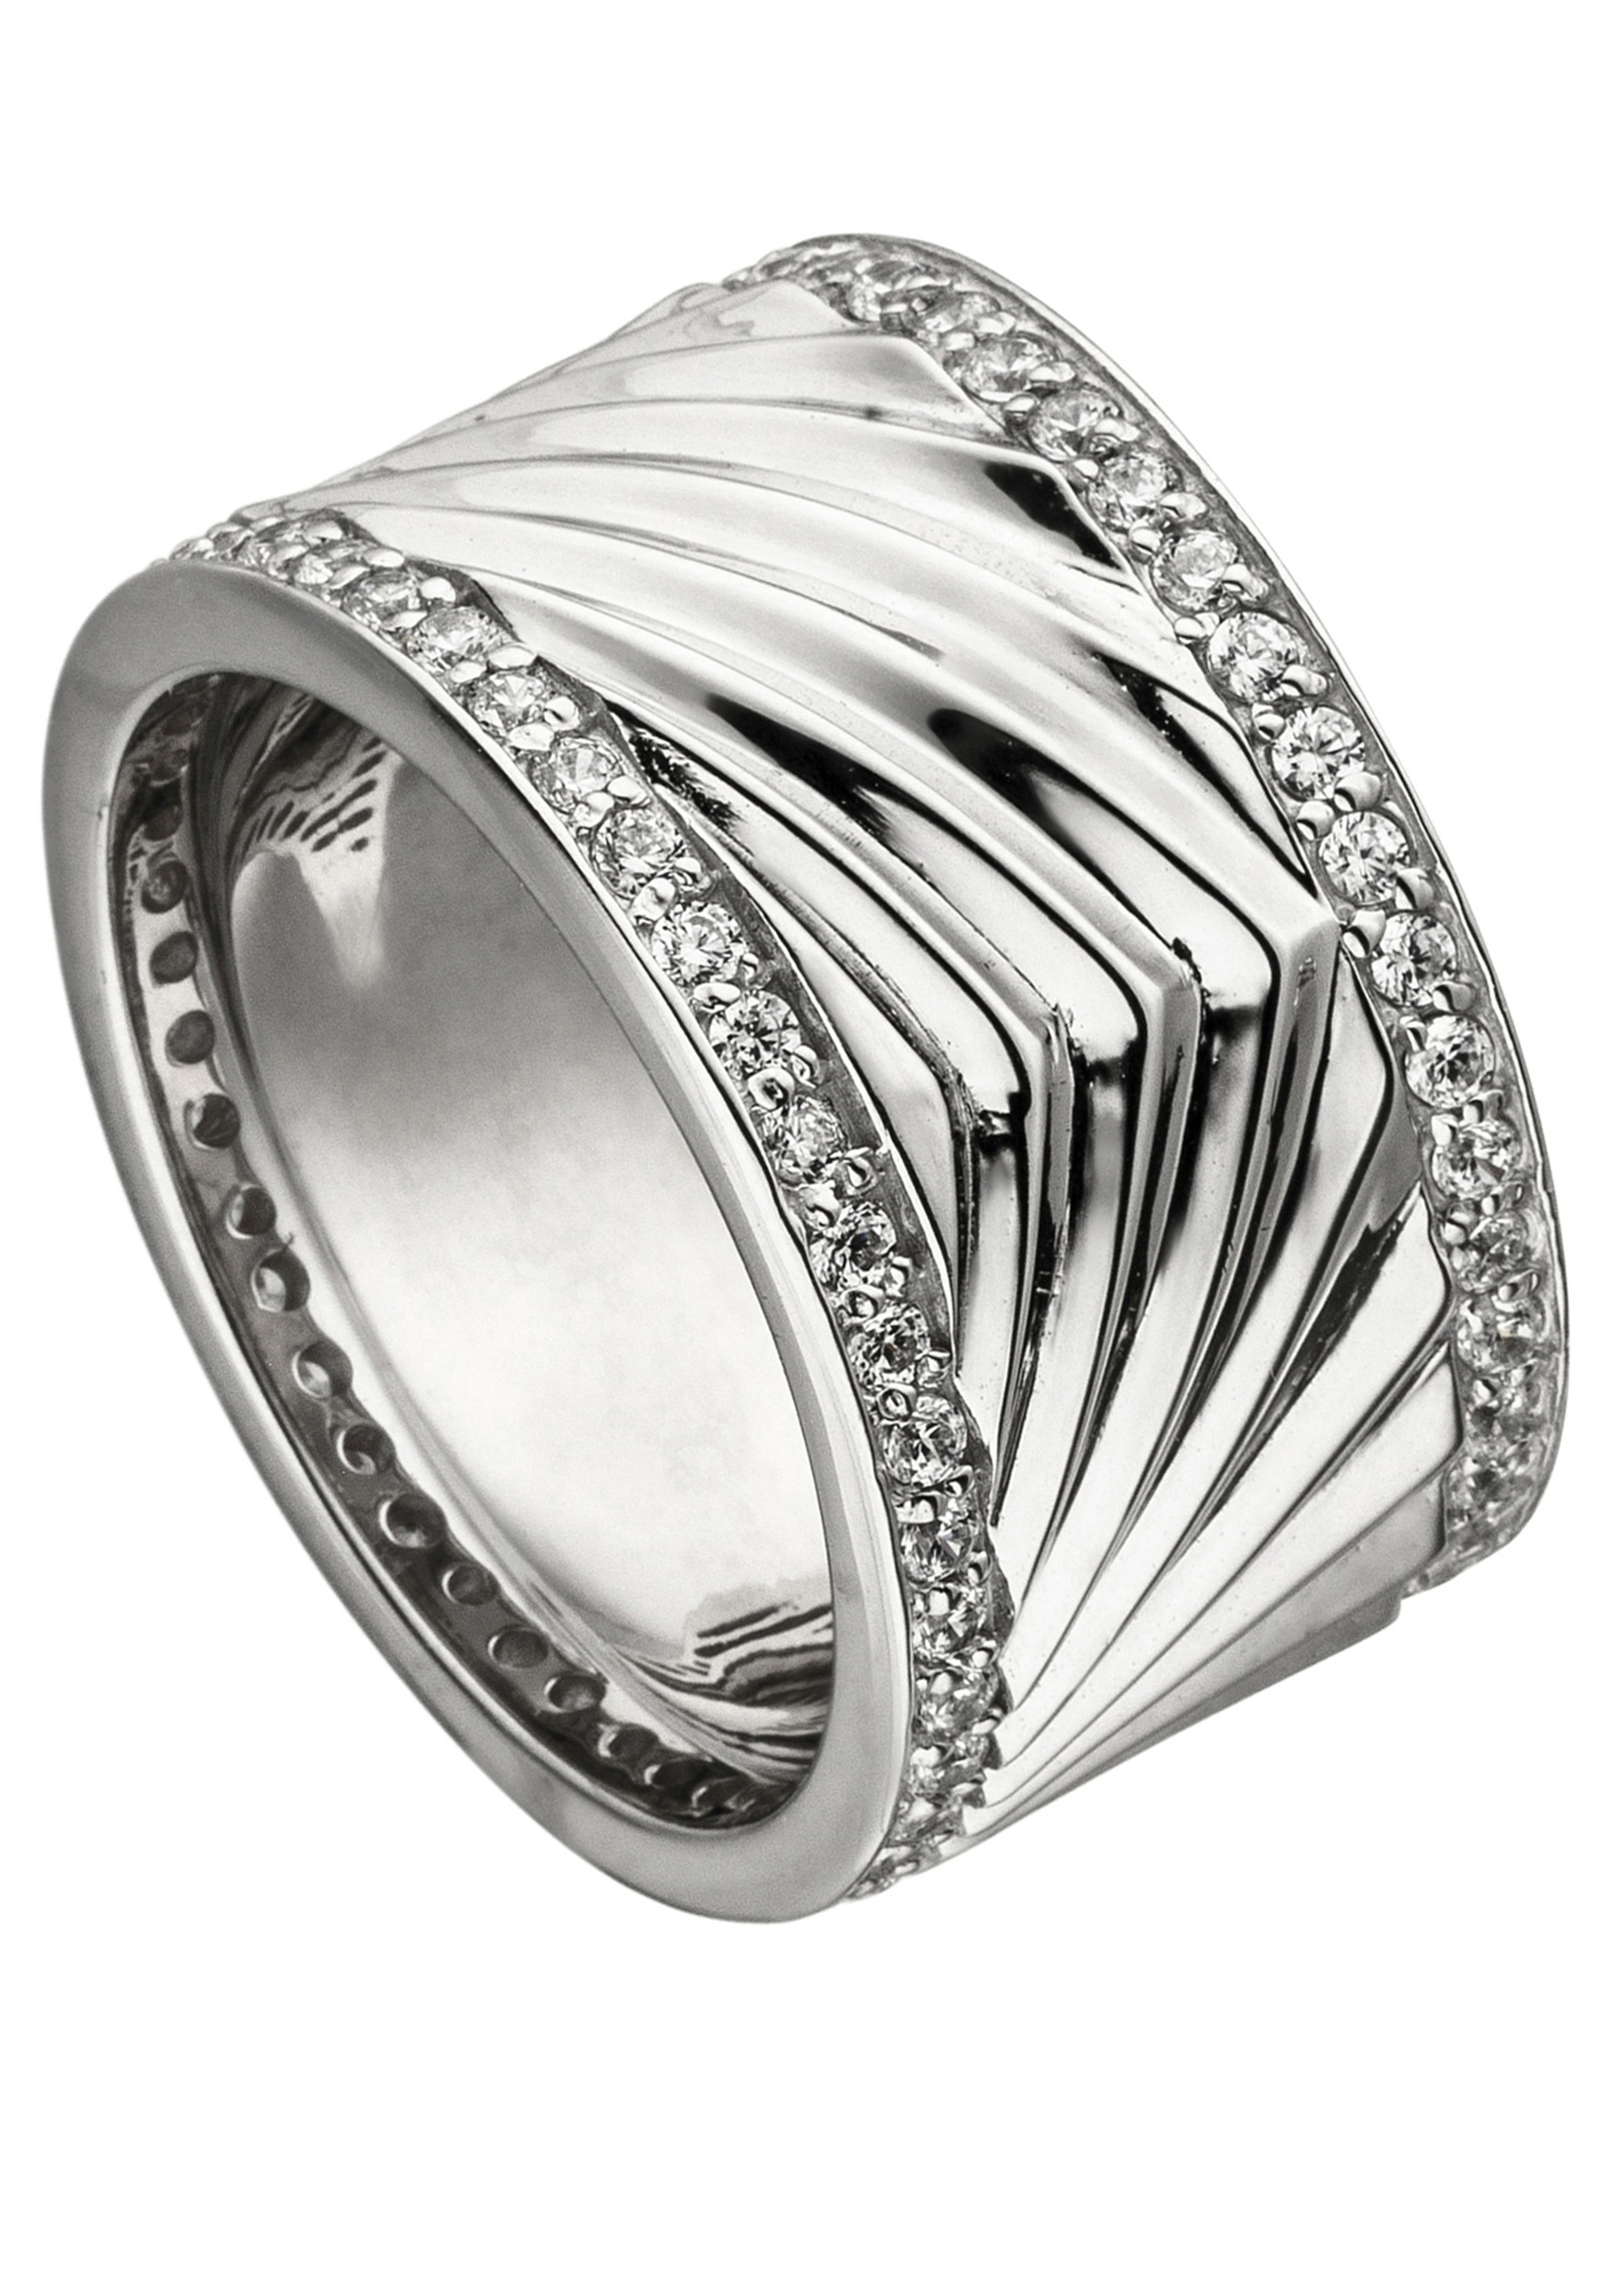 JOBO Fingerring »Breiter Ring mit Zirkonia«, 925 Silber kaufen | I'm walking